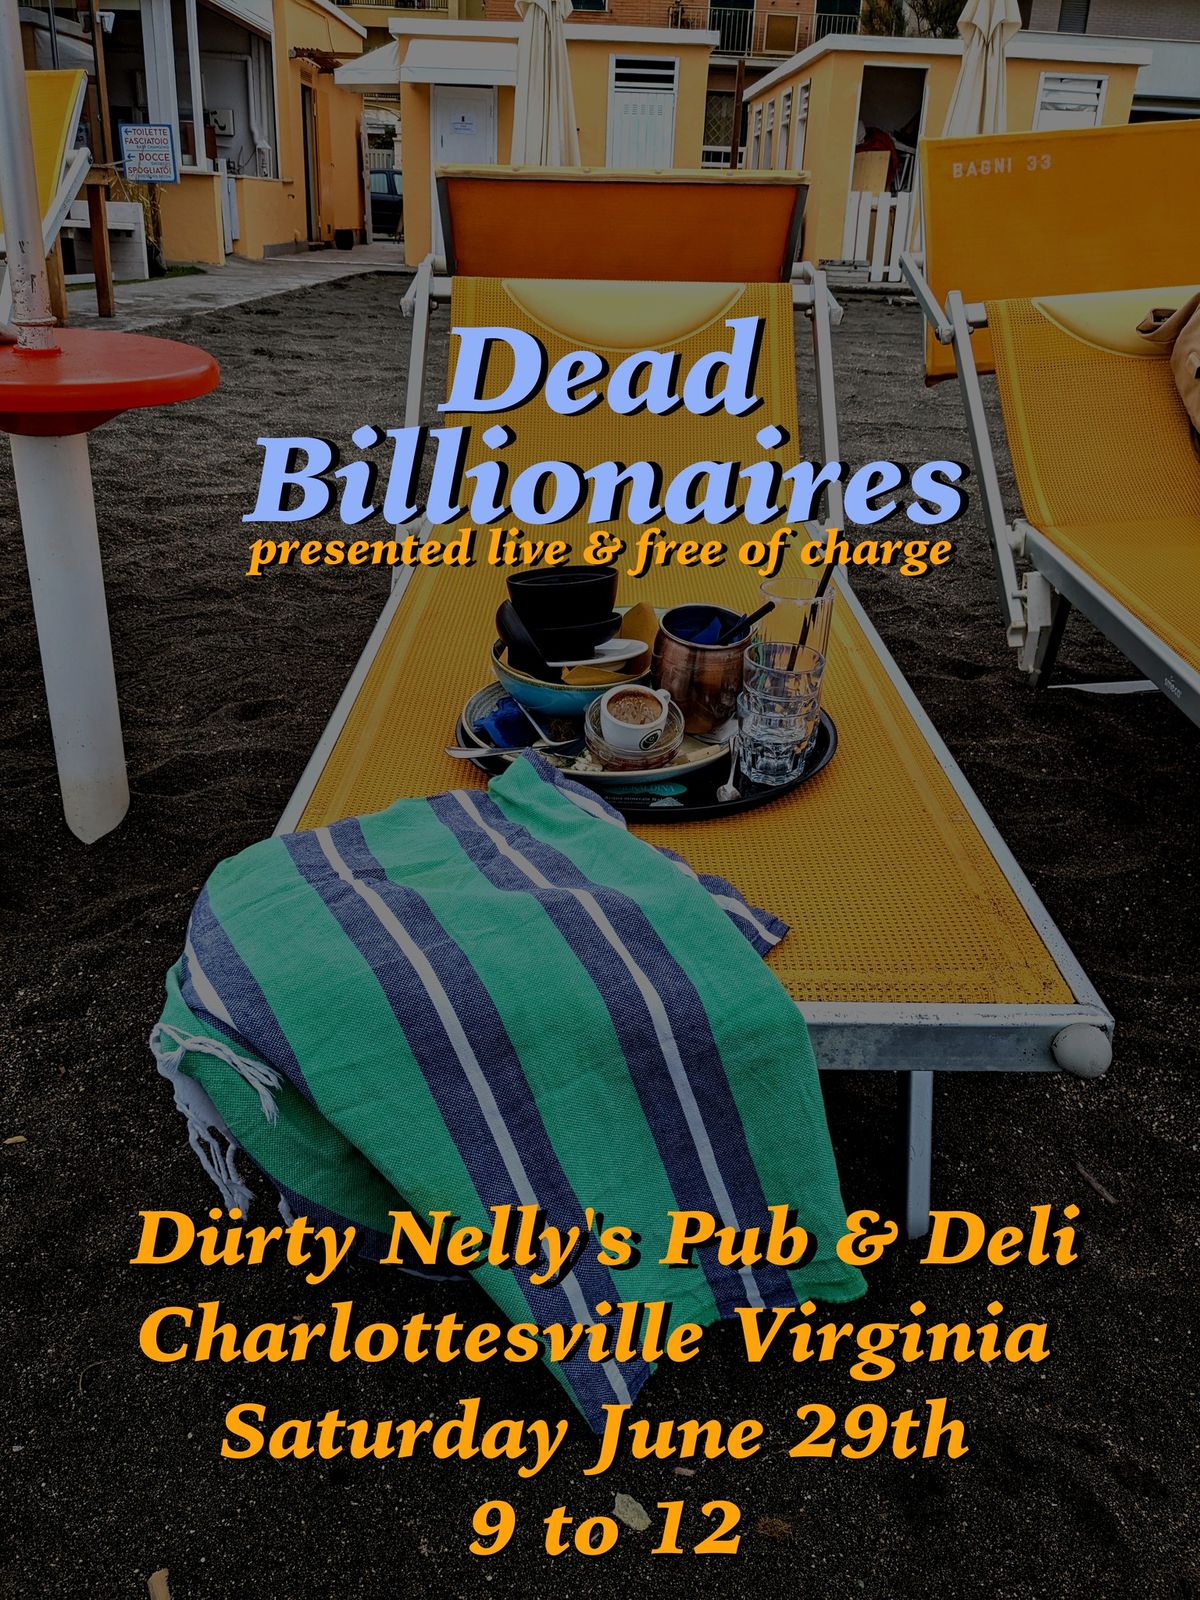 Dead Billionaires Live at D\u00fcrty Nelly's Pub & Deli